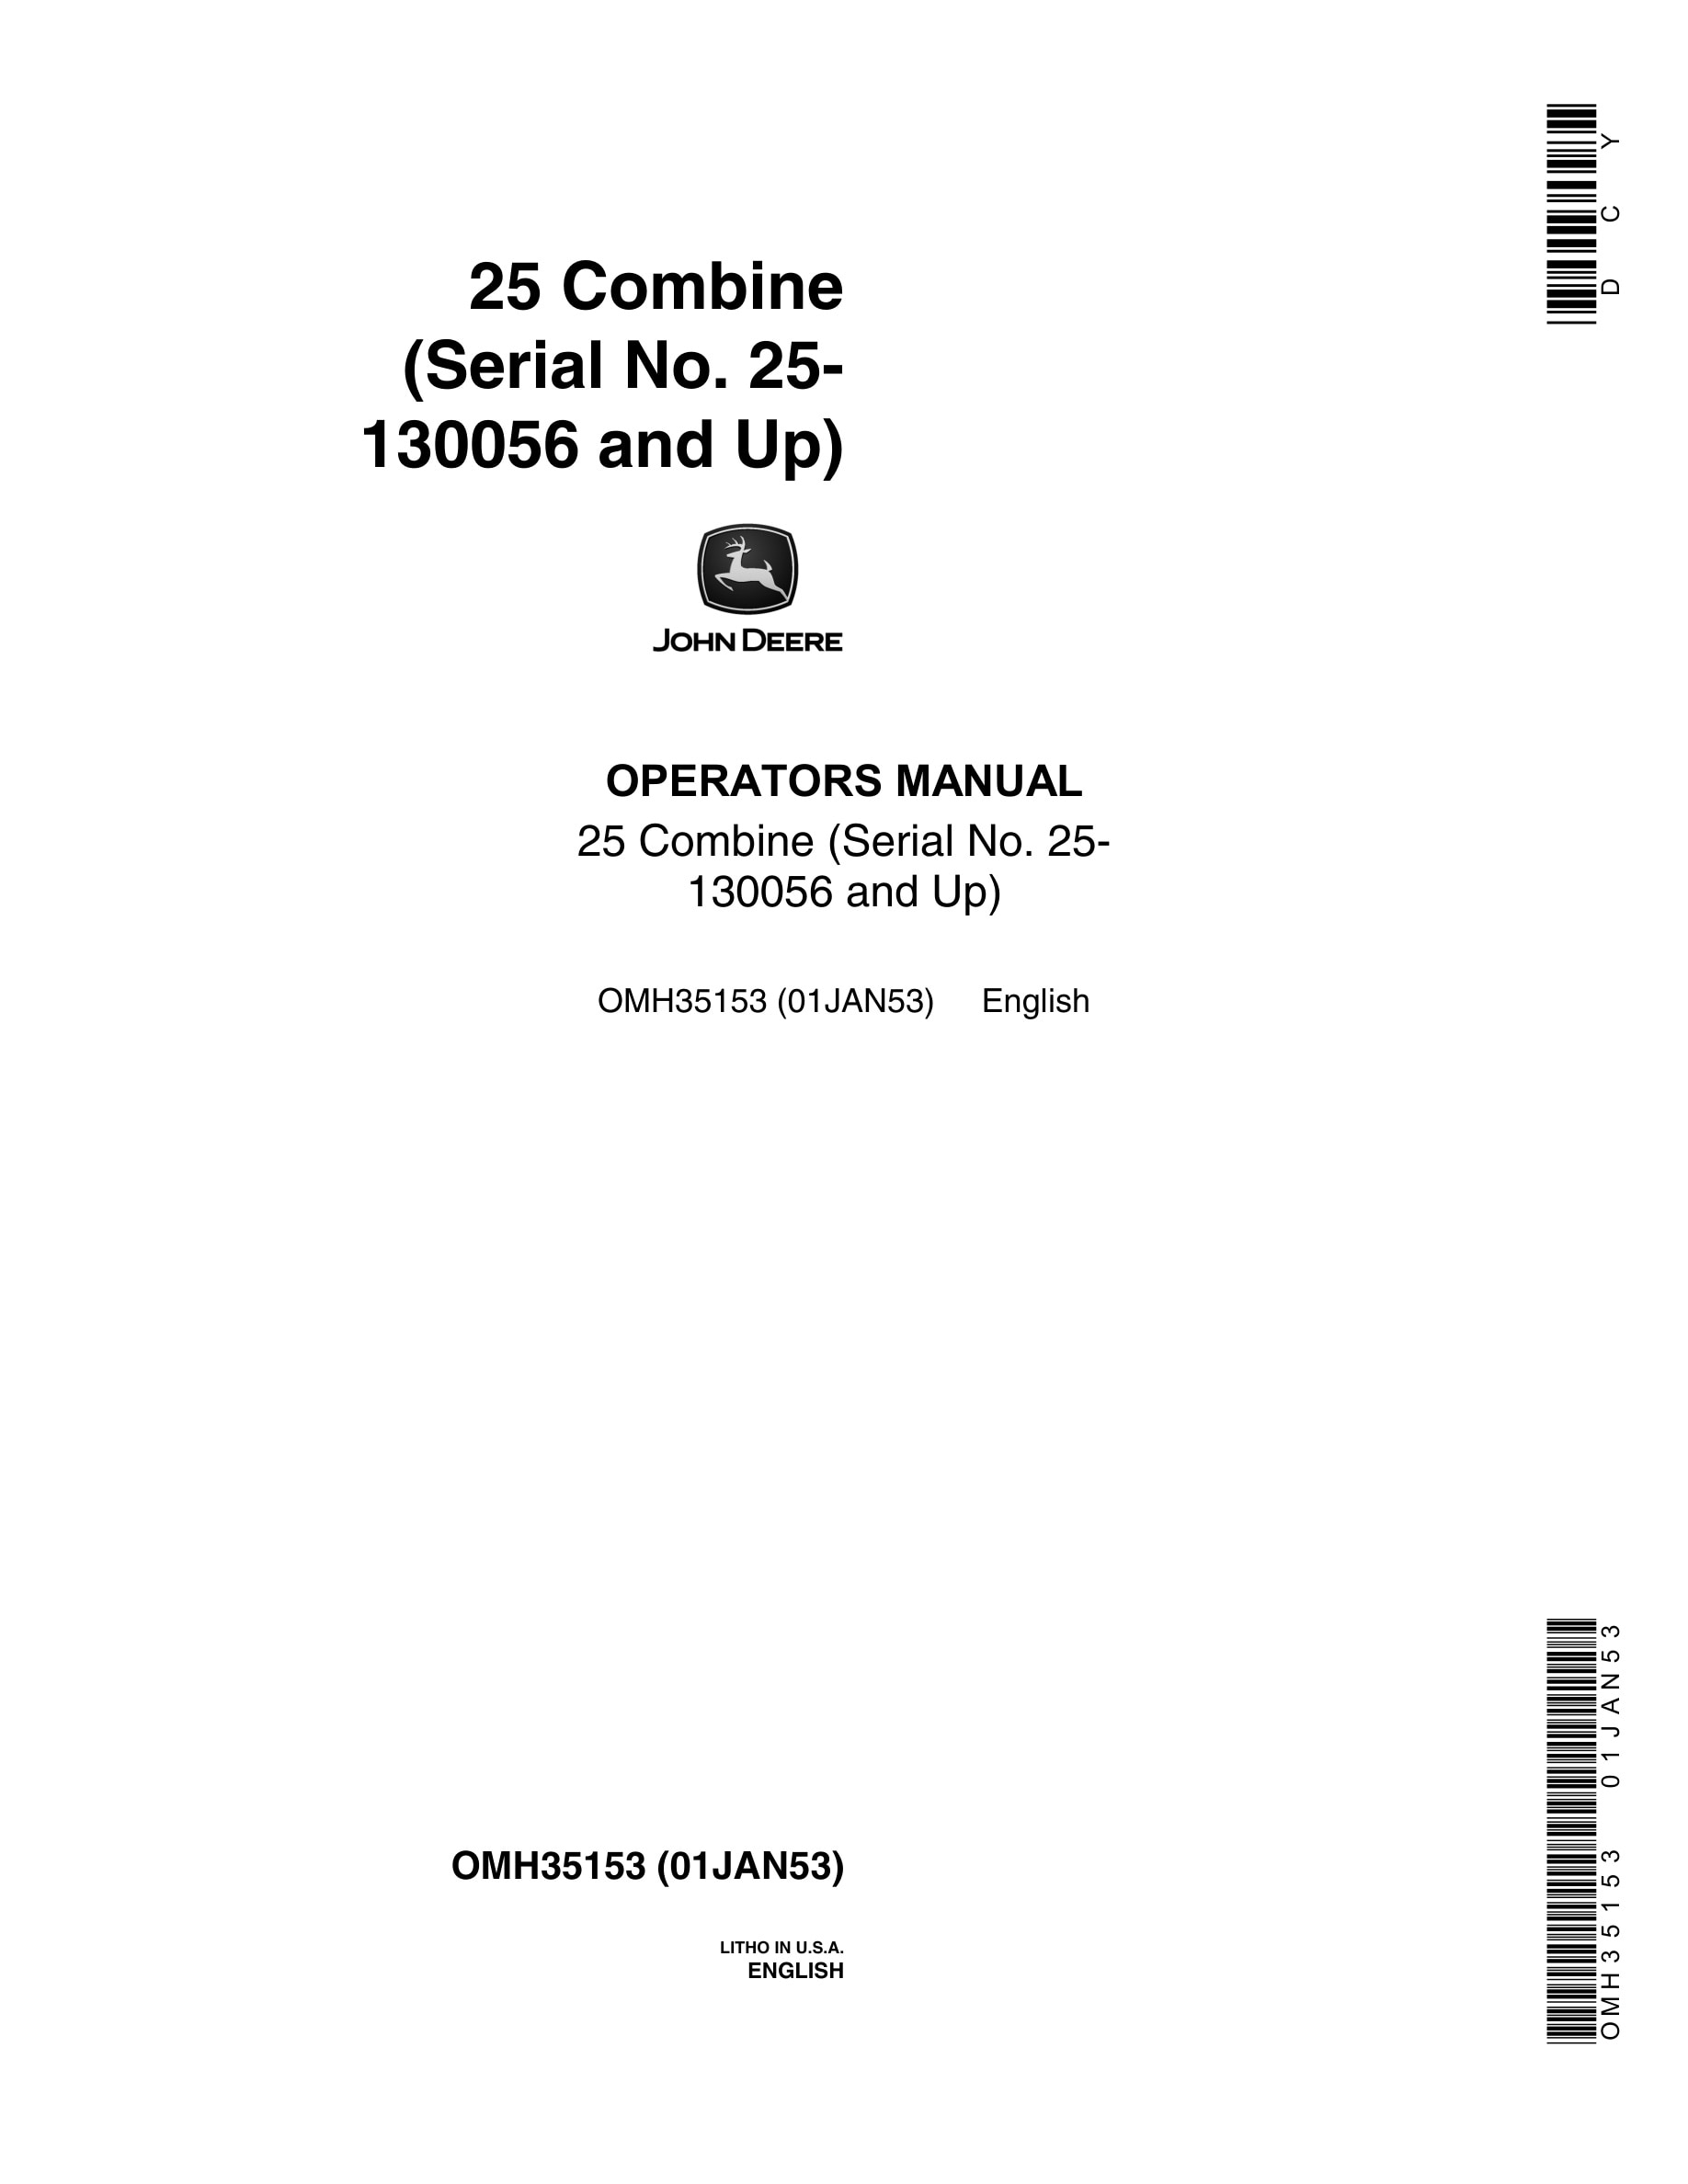 John Deere 25 Combine Operator Manual OMH35153-1